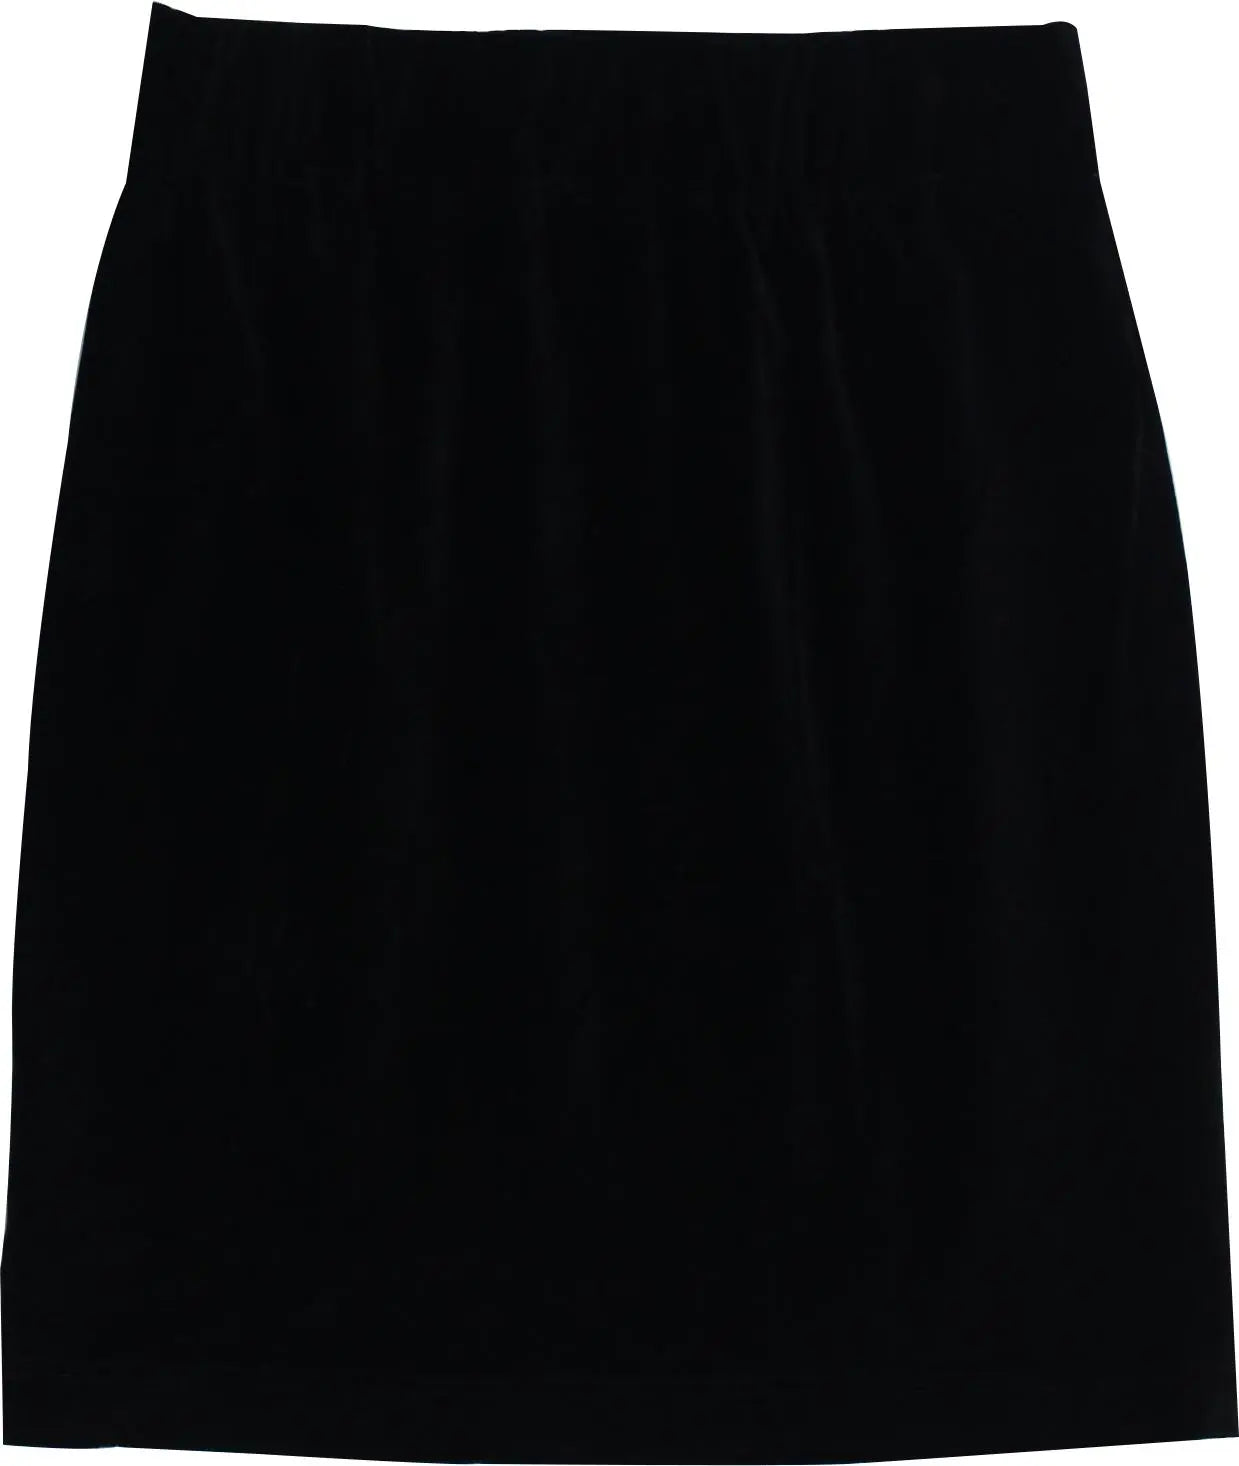 Unknown - Black Velvet Skirt- ThriftTale.com - Vintage and second handclothing